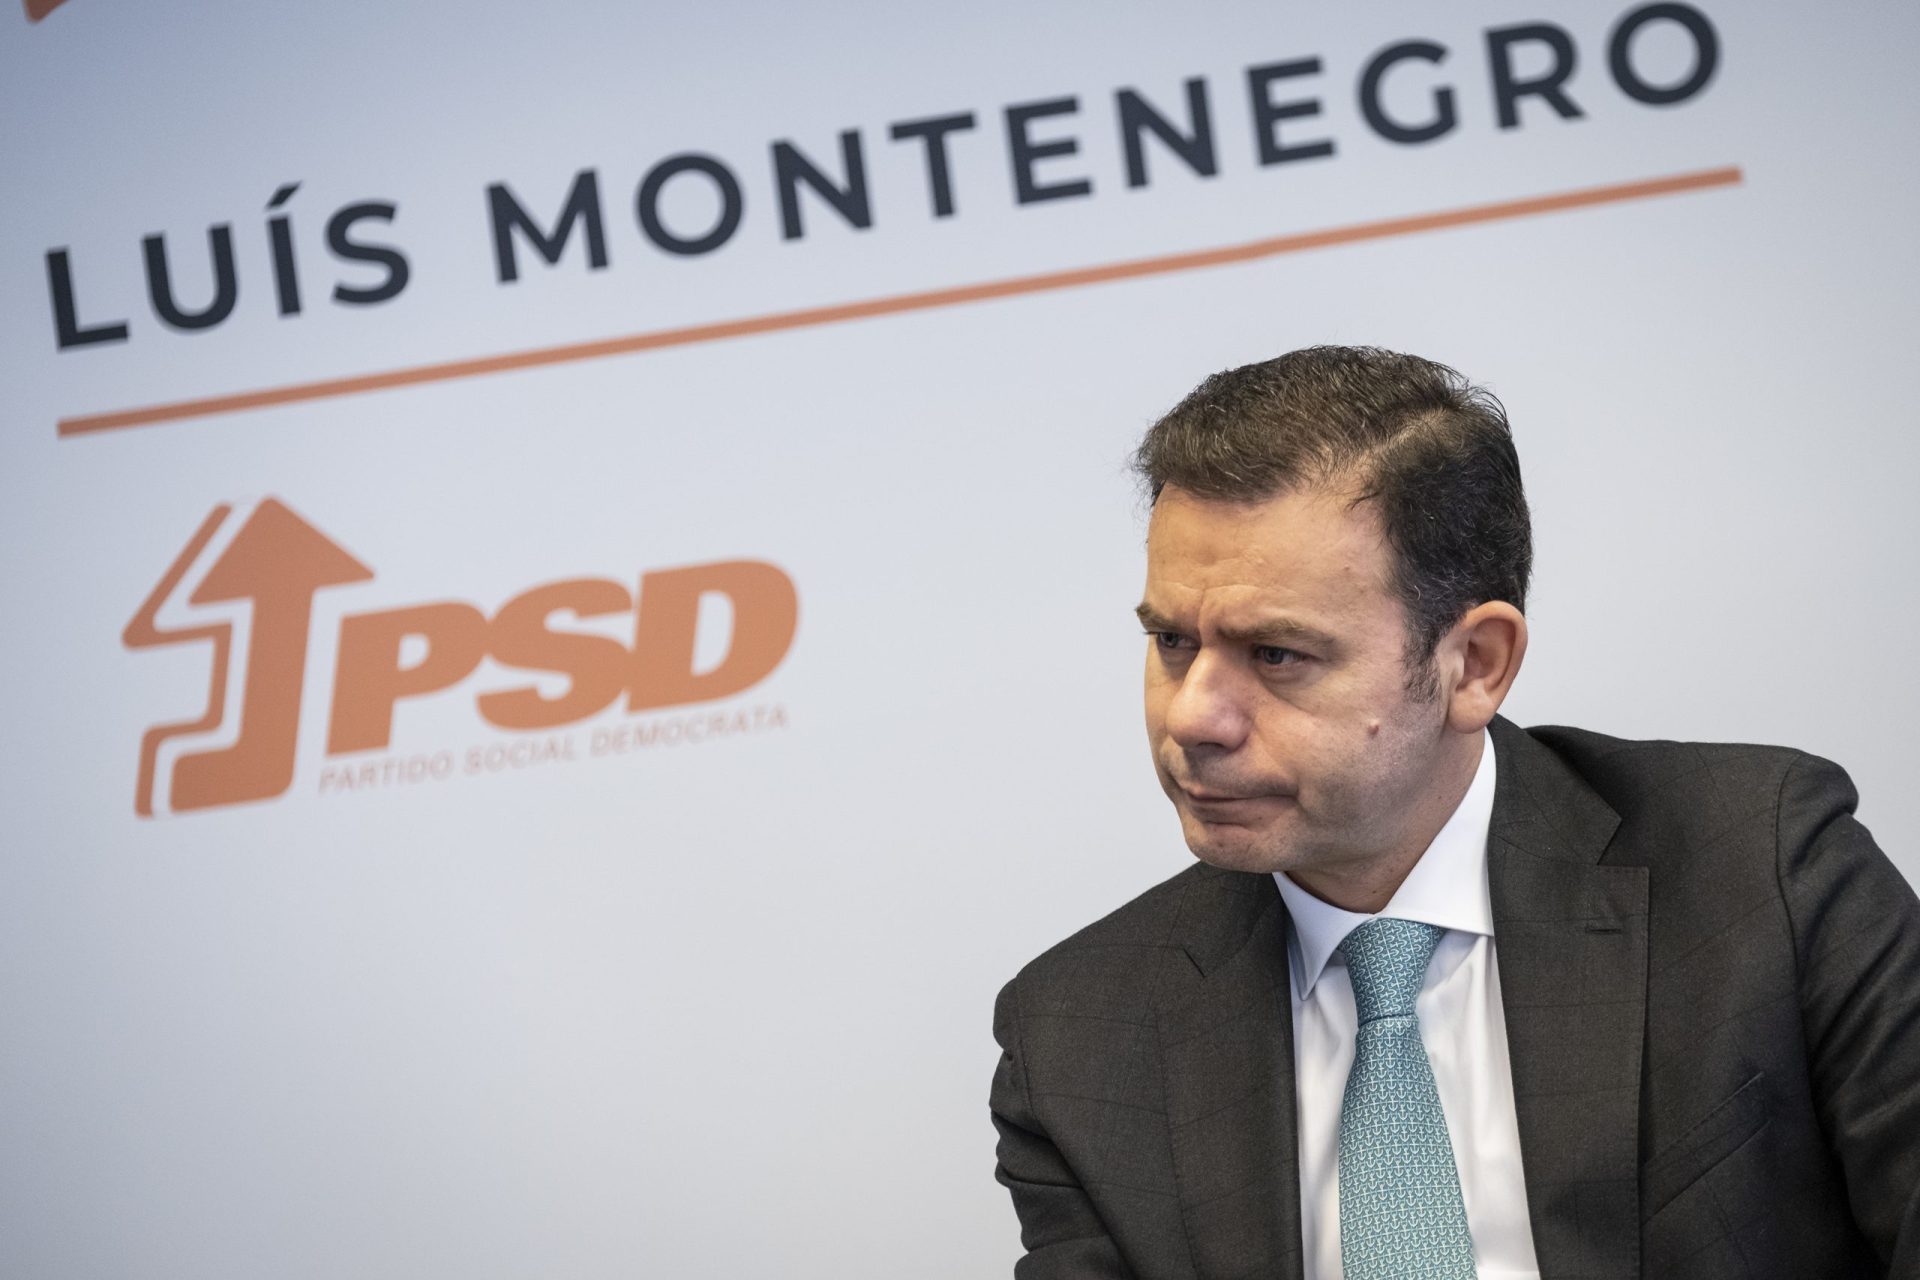 Legislativas. Confusão no boletim de voto preocupa Montenegro